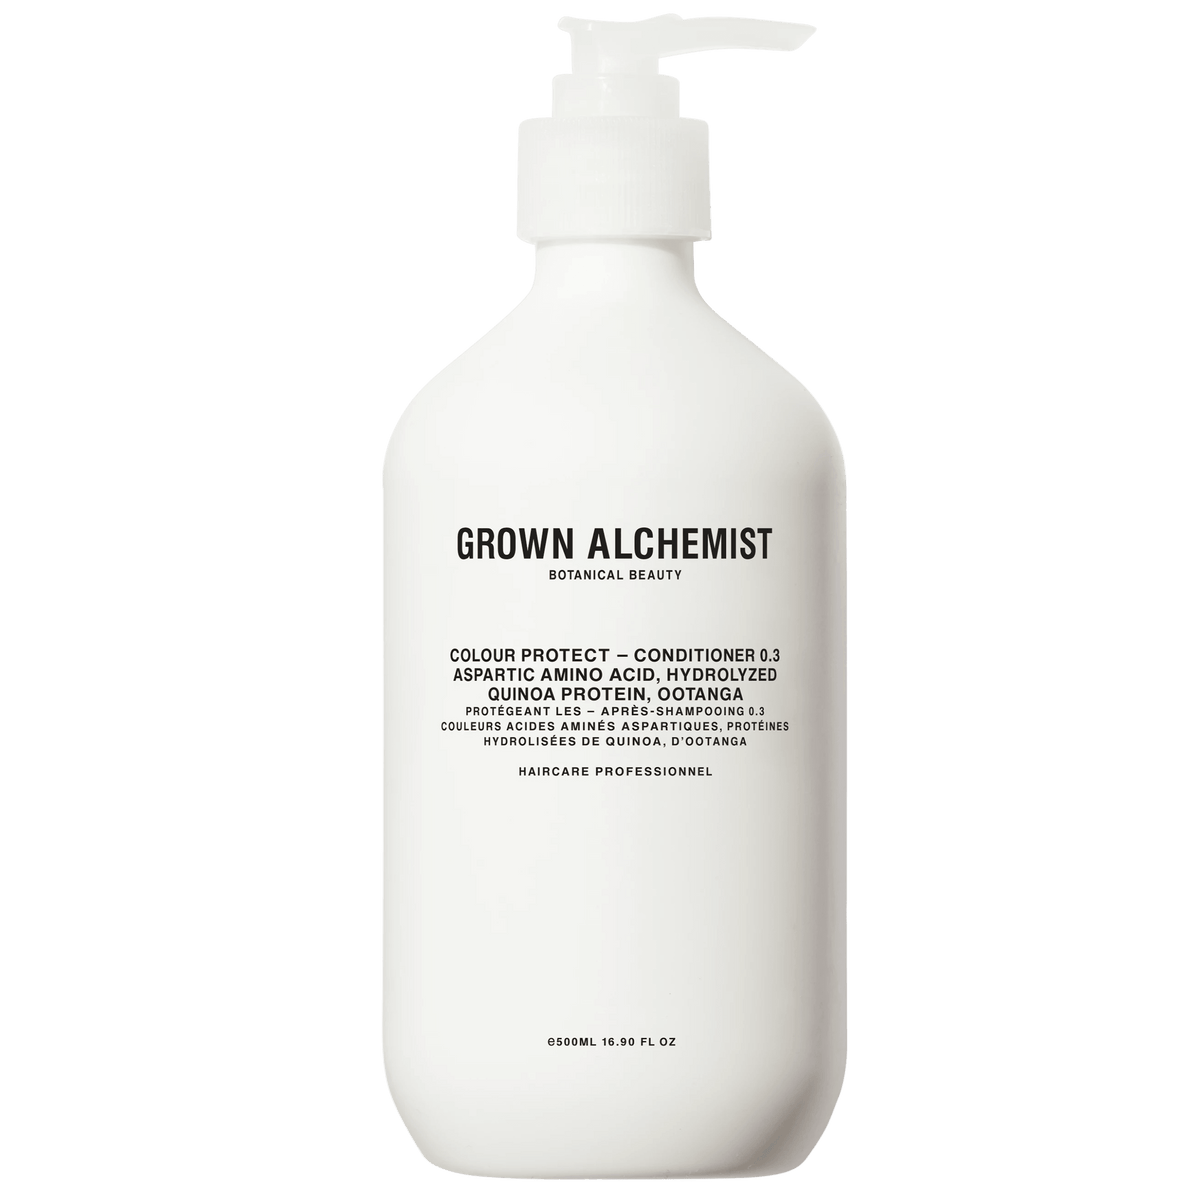 Grown Alchemist Colour Protect - Conditioner 0.3: Aspartic Amino Acid, Hydrolyzed Quinoa Protein, Ootanga, 500ml